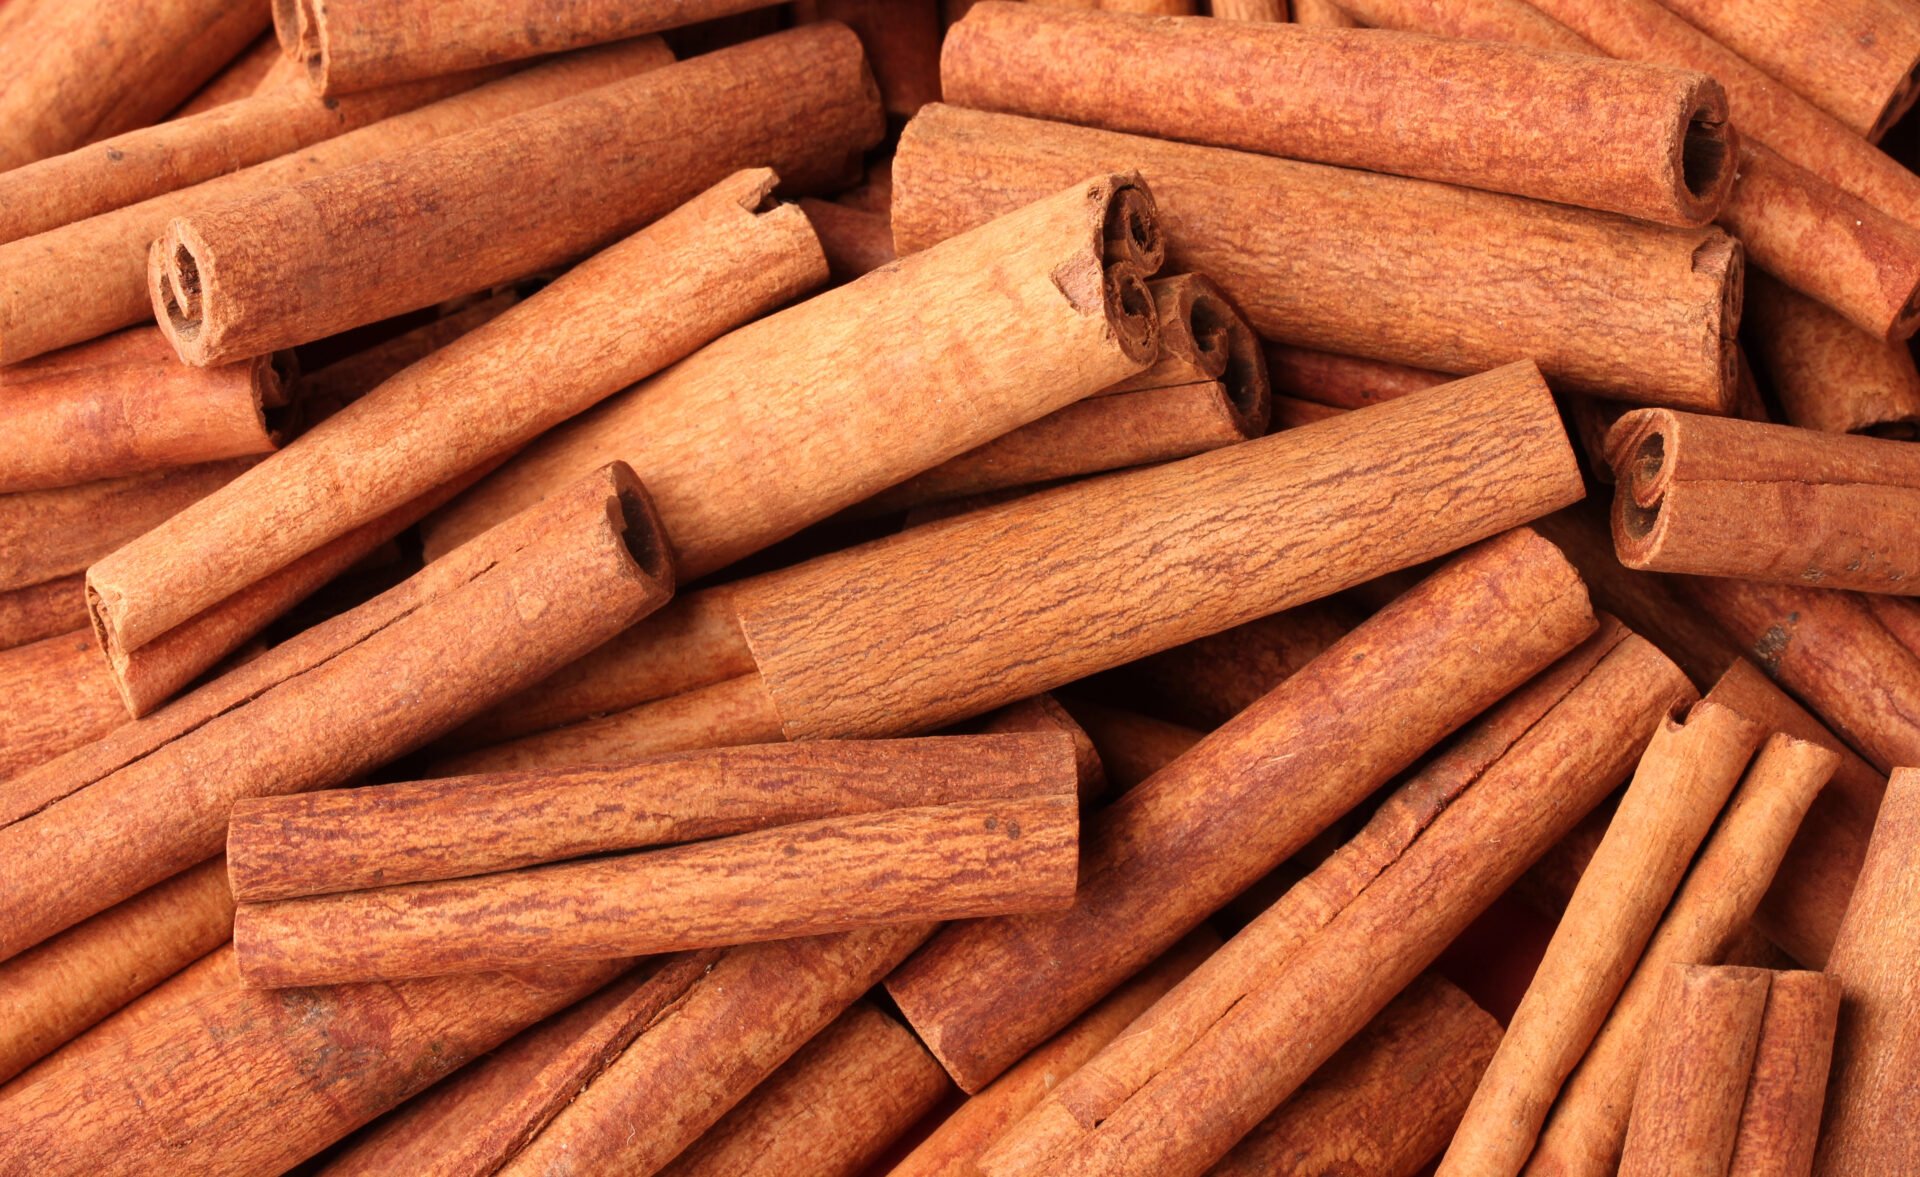 Cinnamon sticks tested for lead